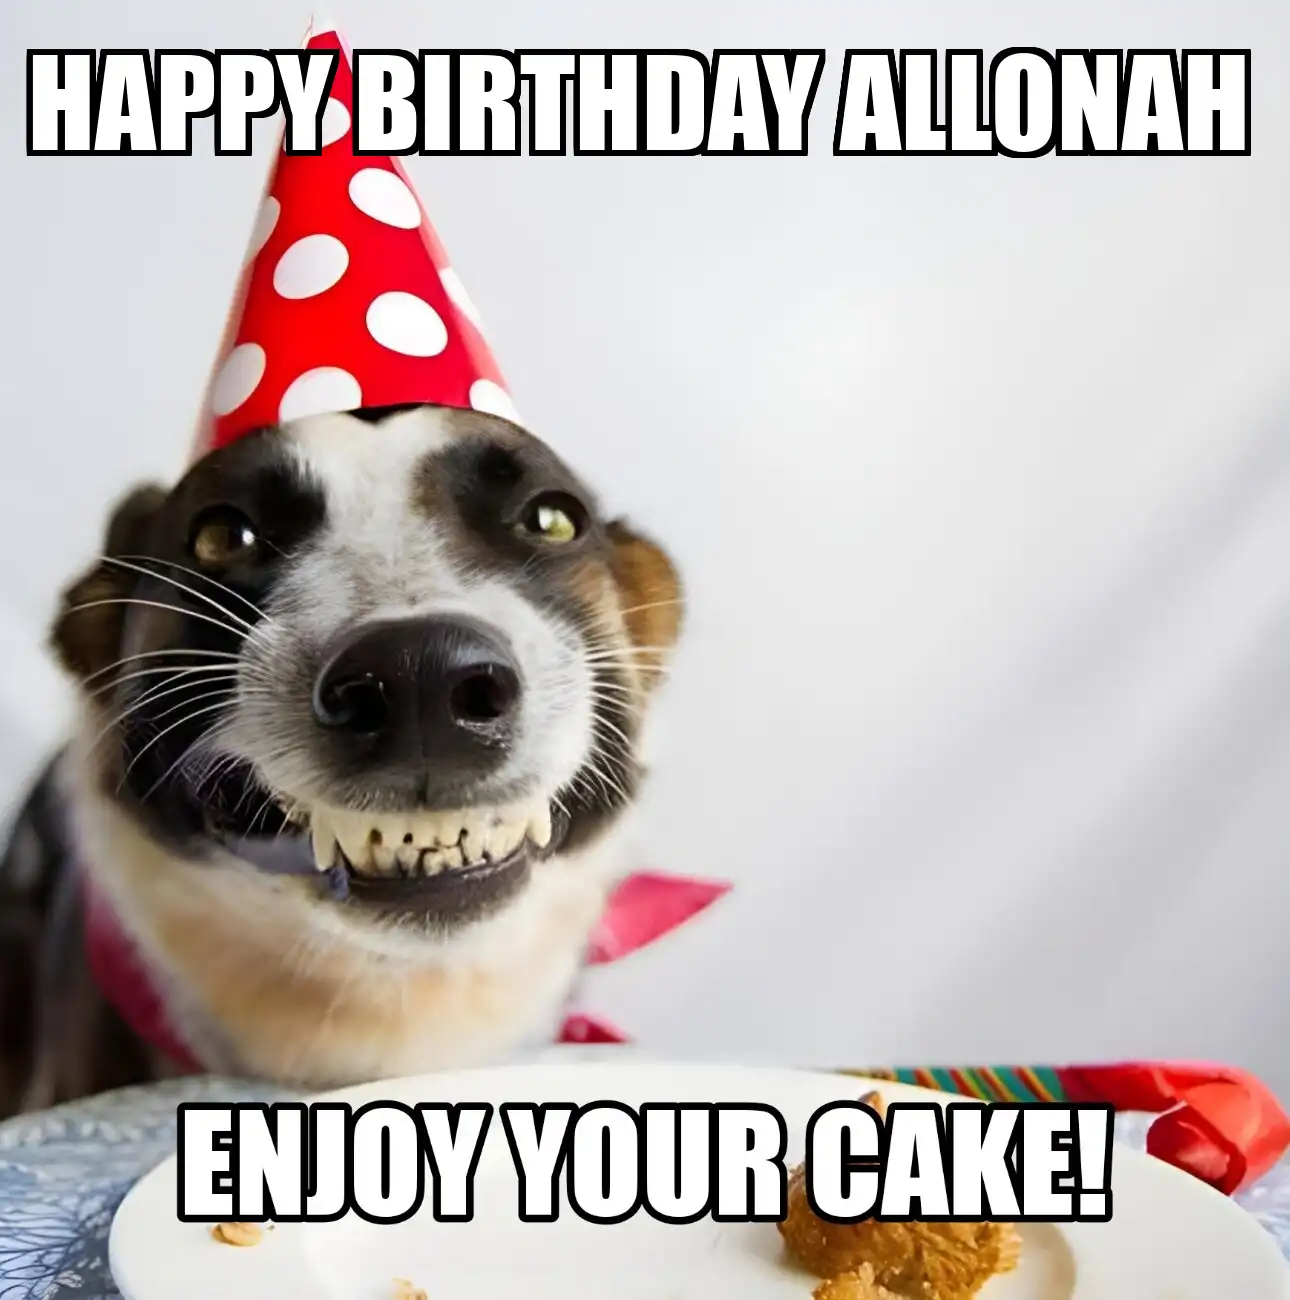 Happy Birthday Allonah Enjoy Your Cake Dog Meme